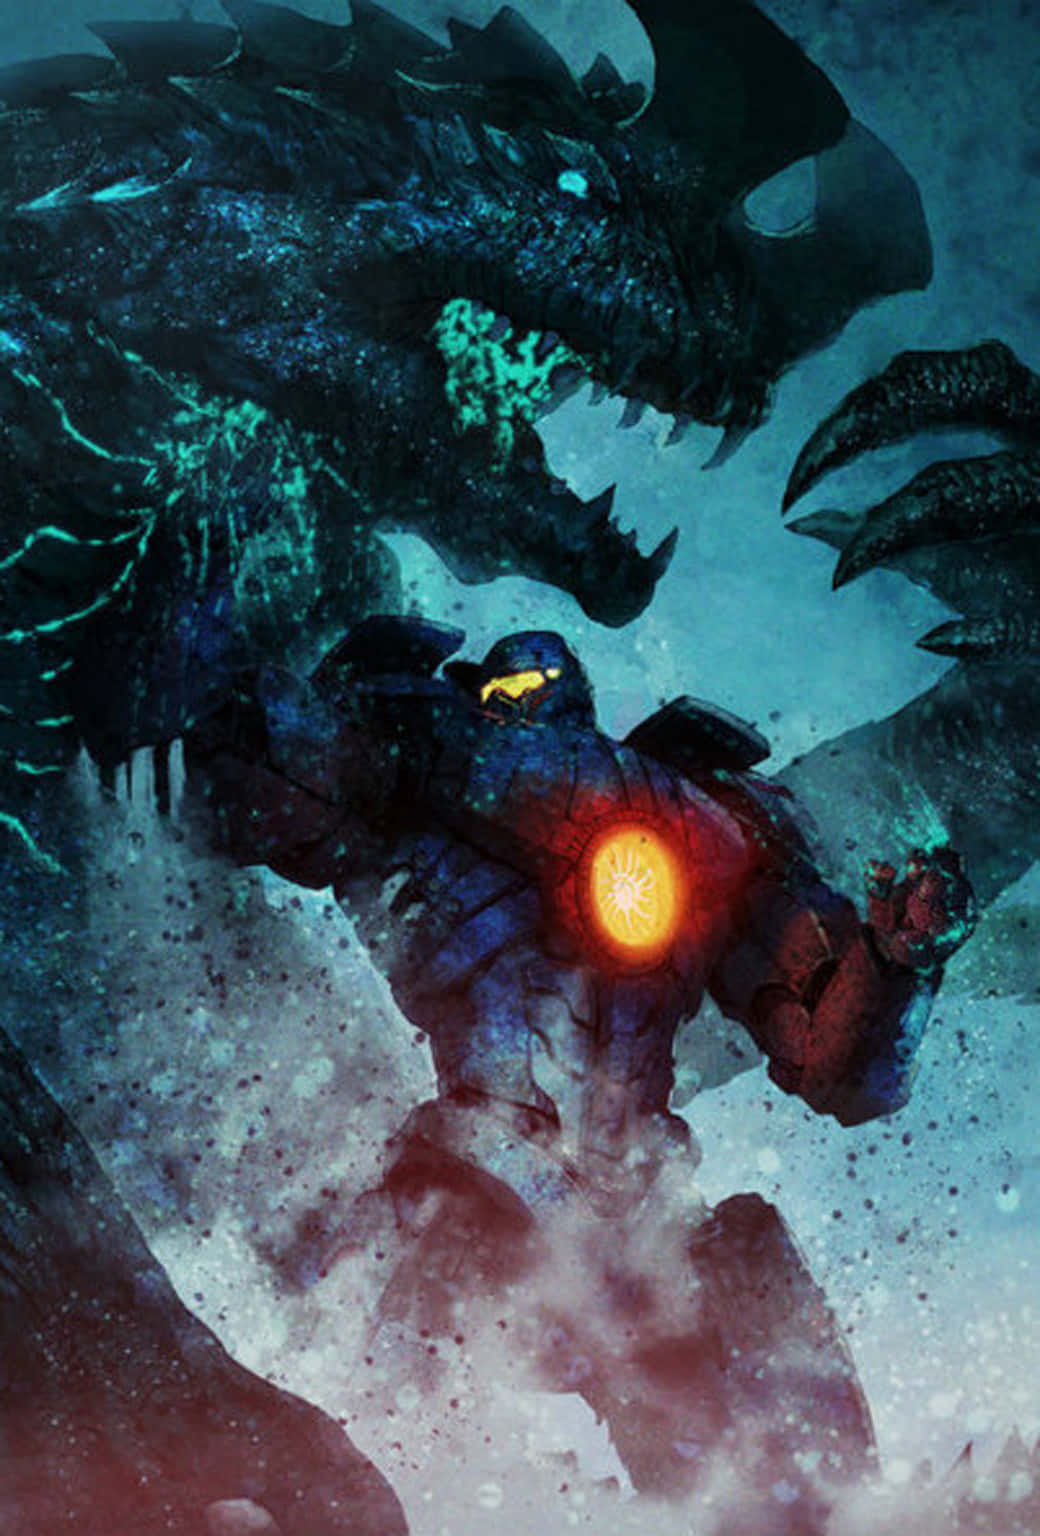 Majestic Kaiju Unleashed - The Ultimate Force Of Destruction Background